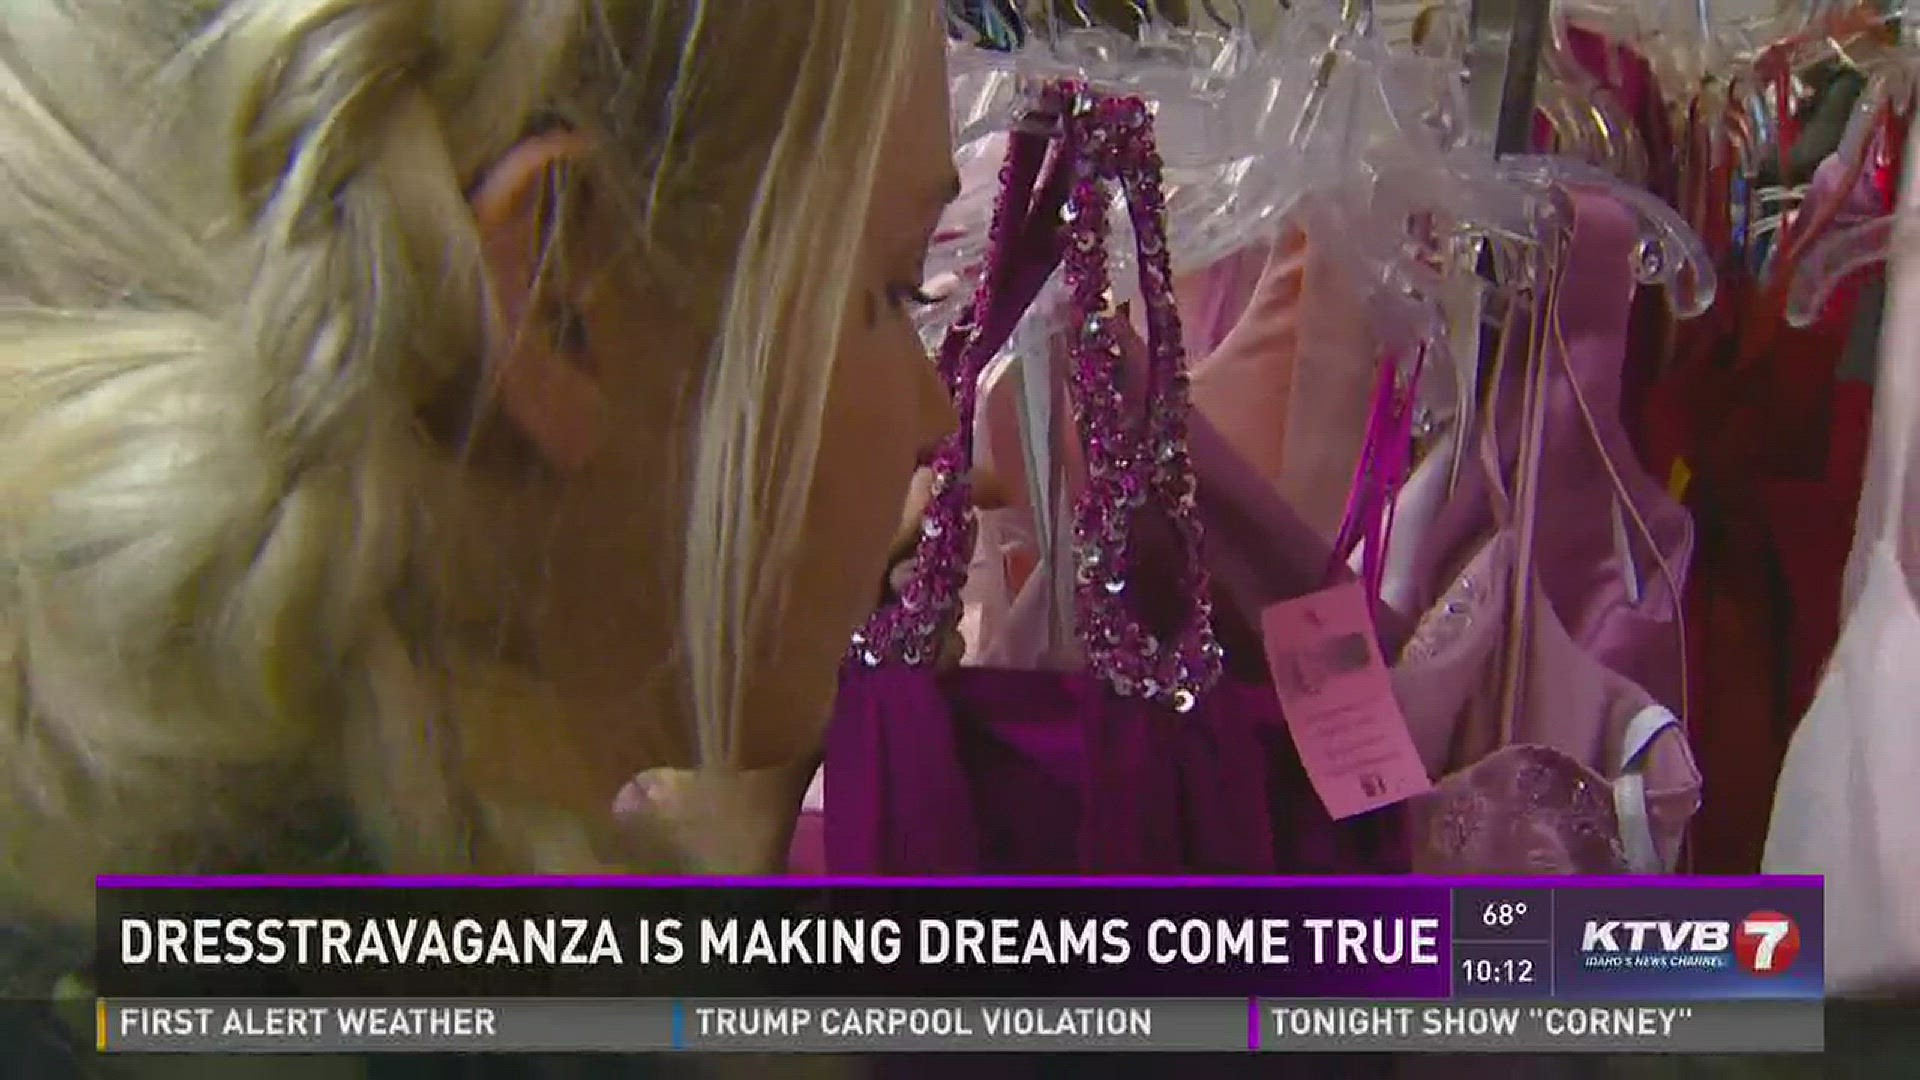 Dresstravaganza is making dreams come true.